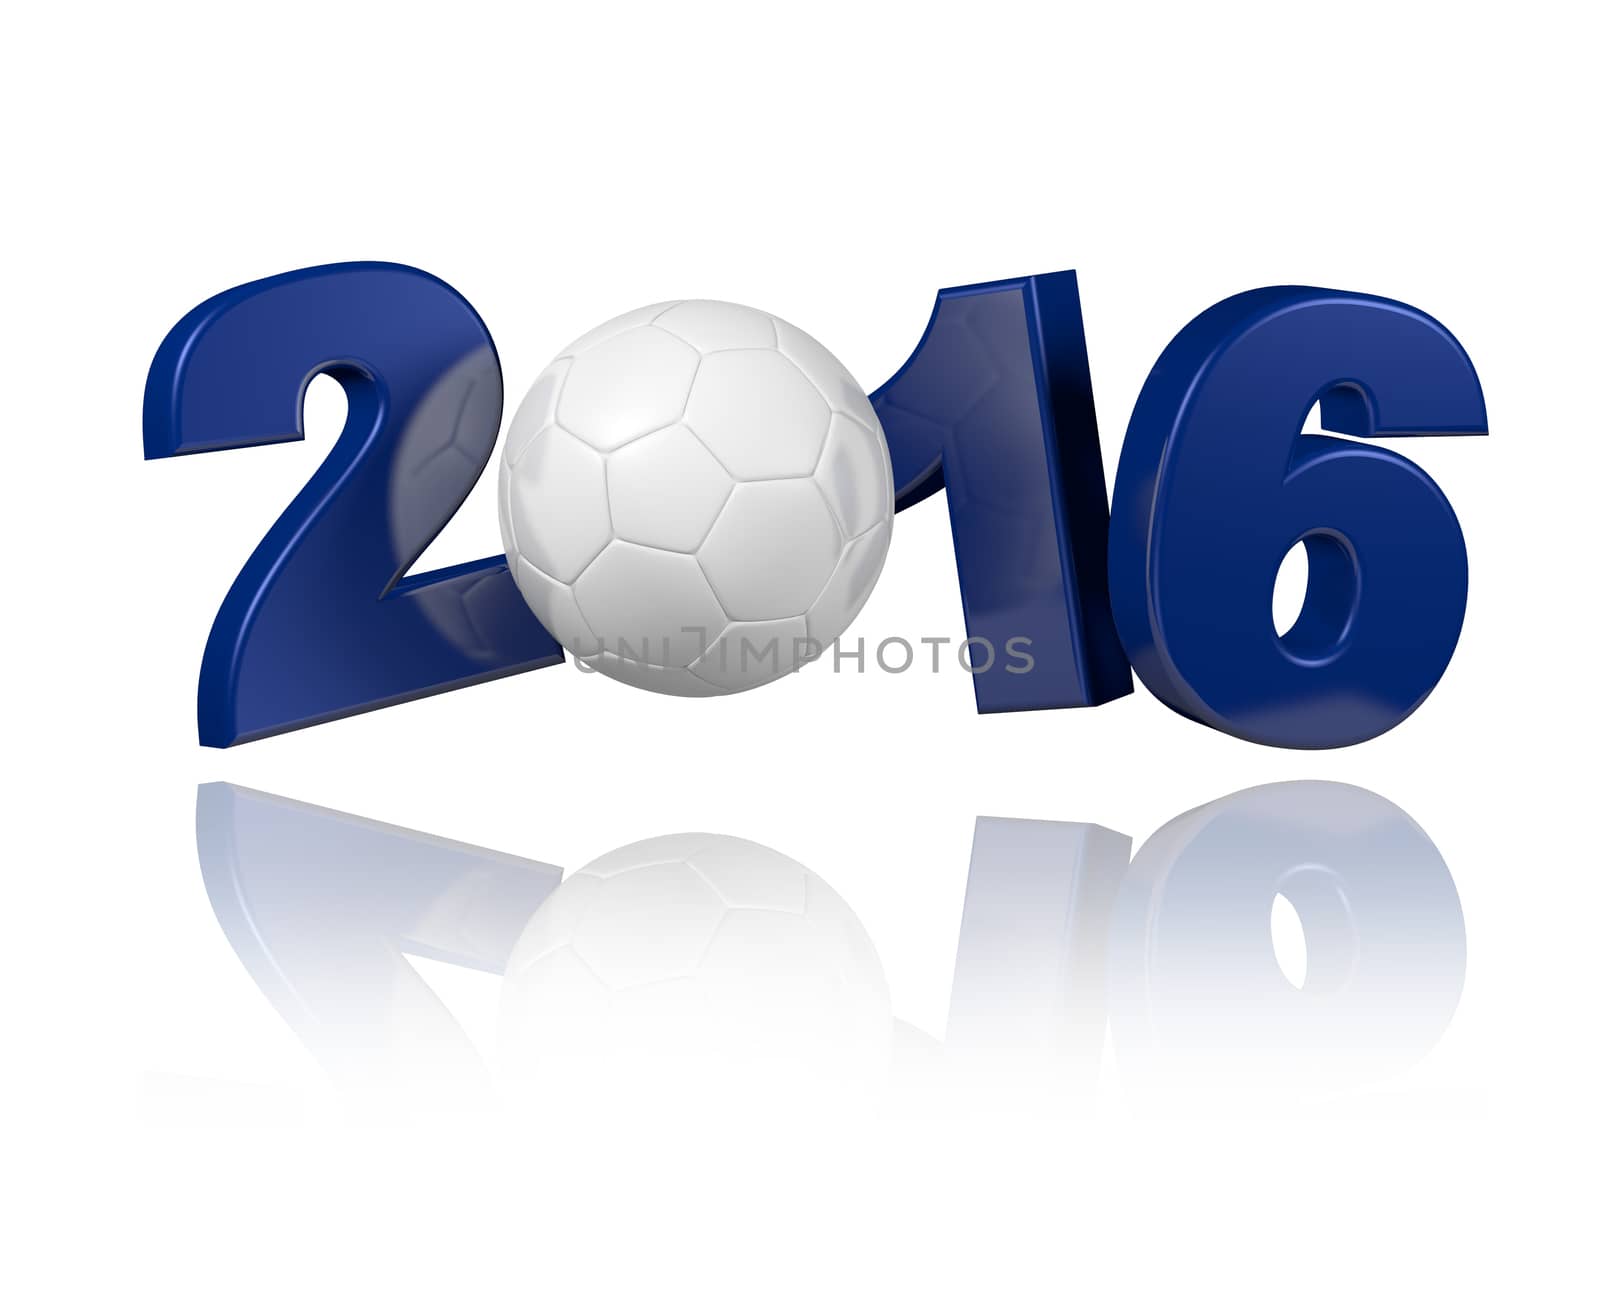 Handball 2016 design  by shkyo30